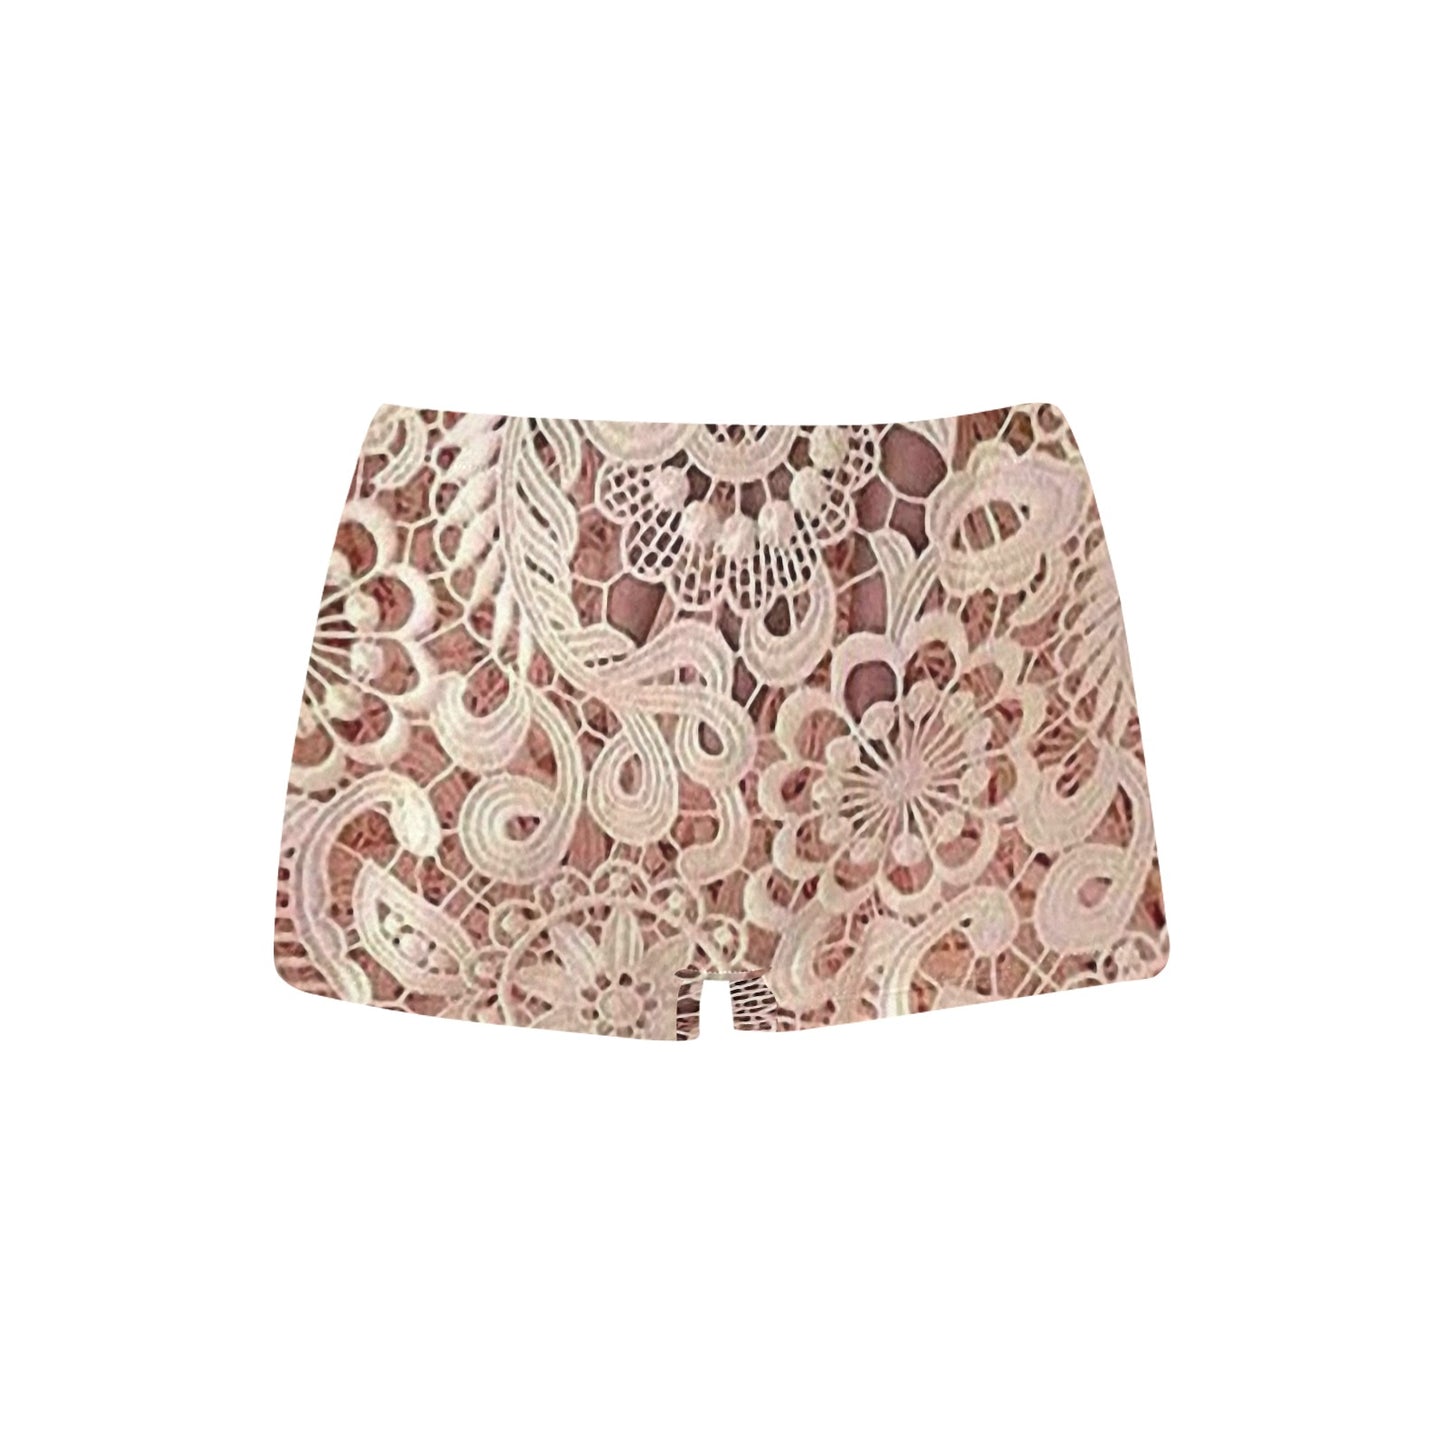 Printed Lace Boyshorts, daisy dukes, pum pum shorts, shortie shorts, design 11